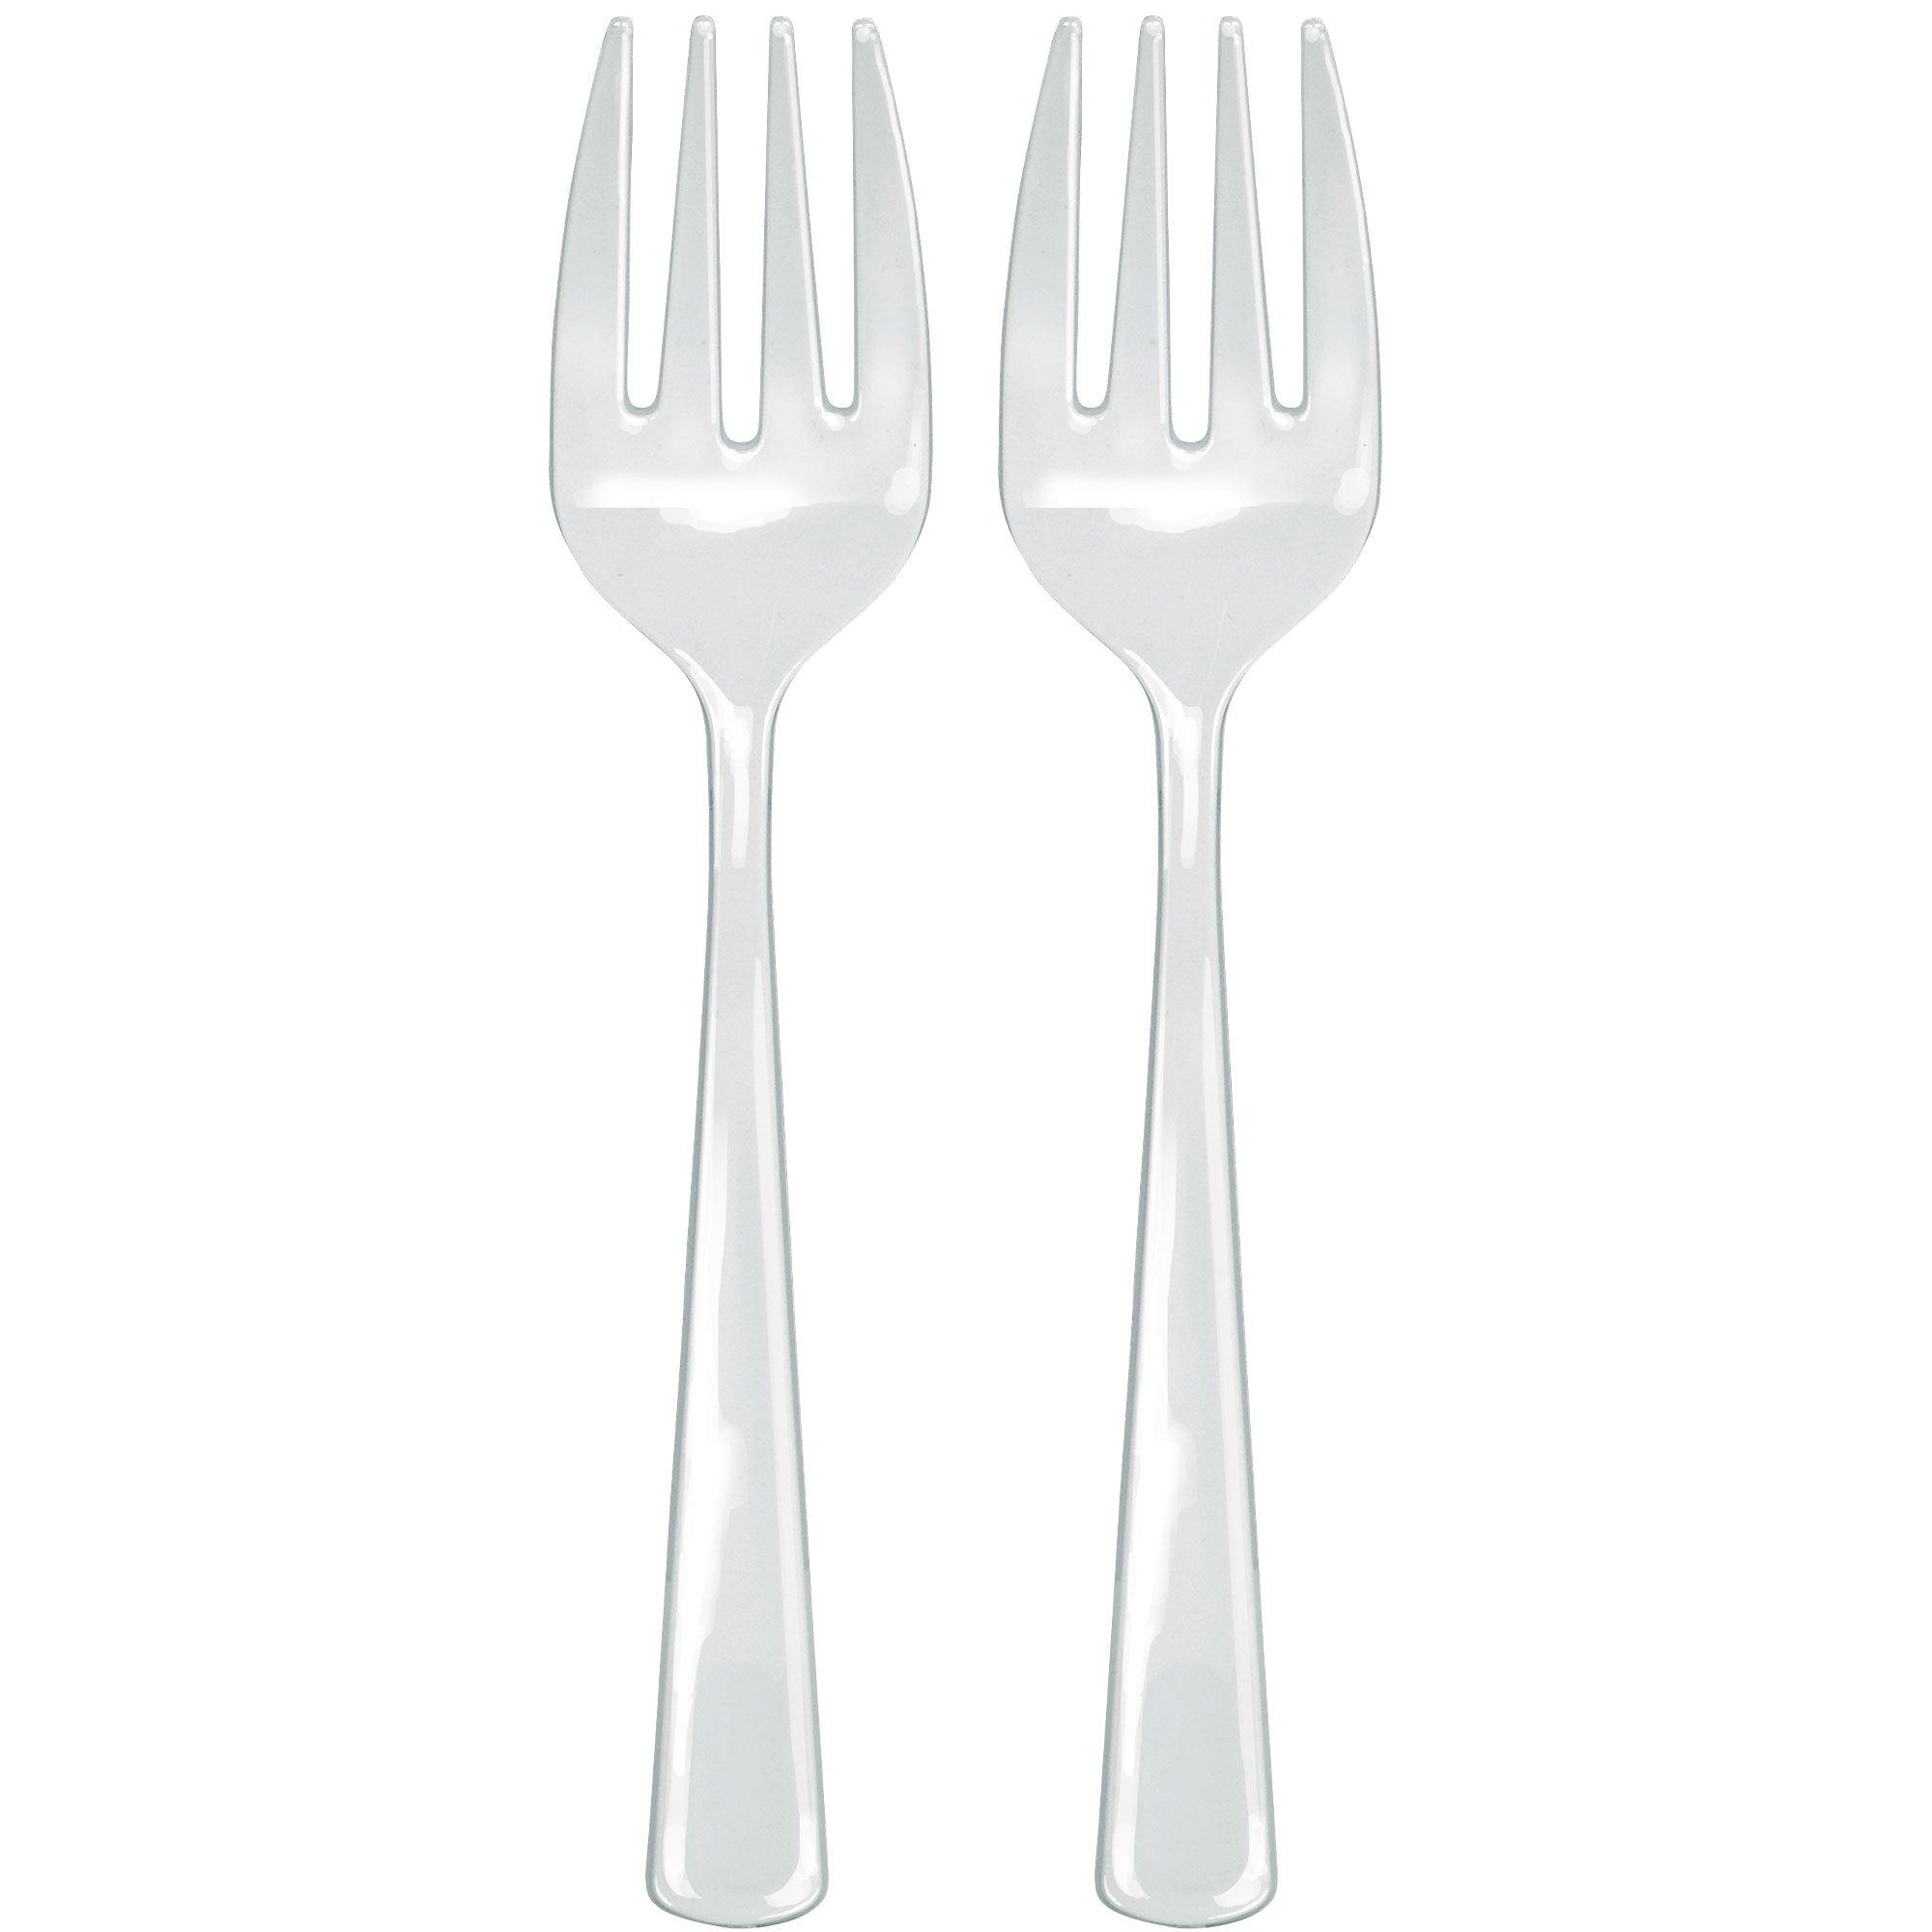 Plastic Serving Forks, 9.75in, 2ct